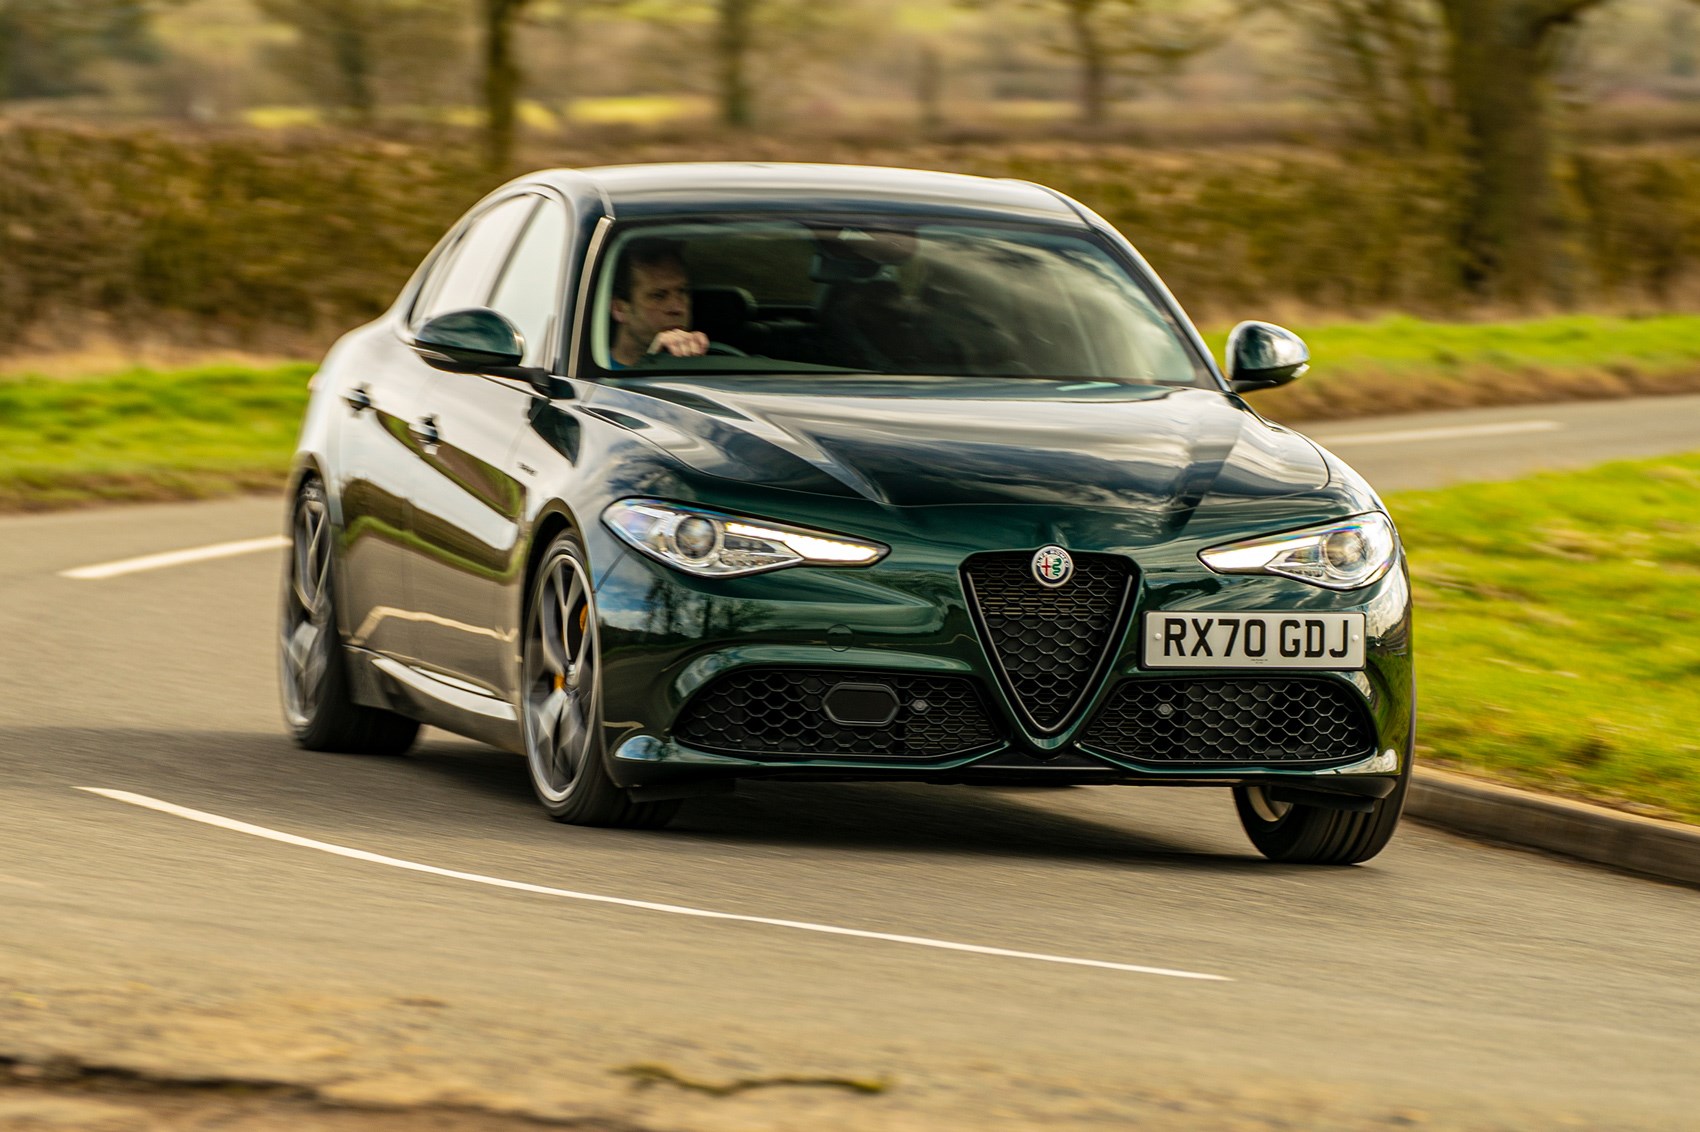 Alfa Romeo Giulietta (2014 - 2020) used car review, Car review